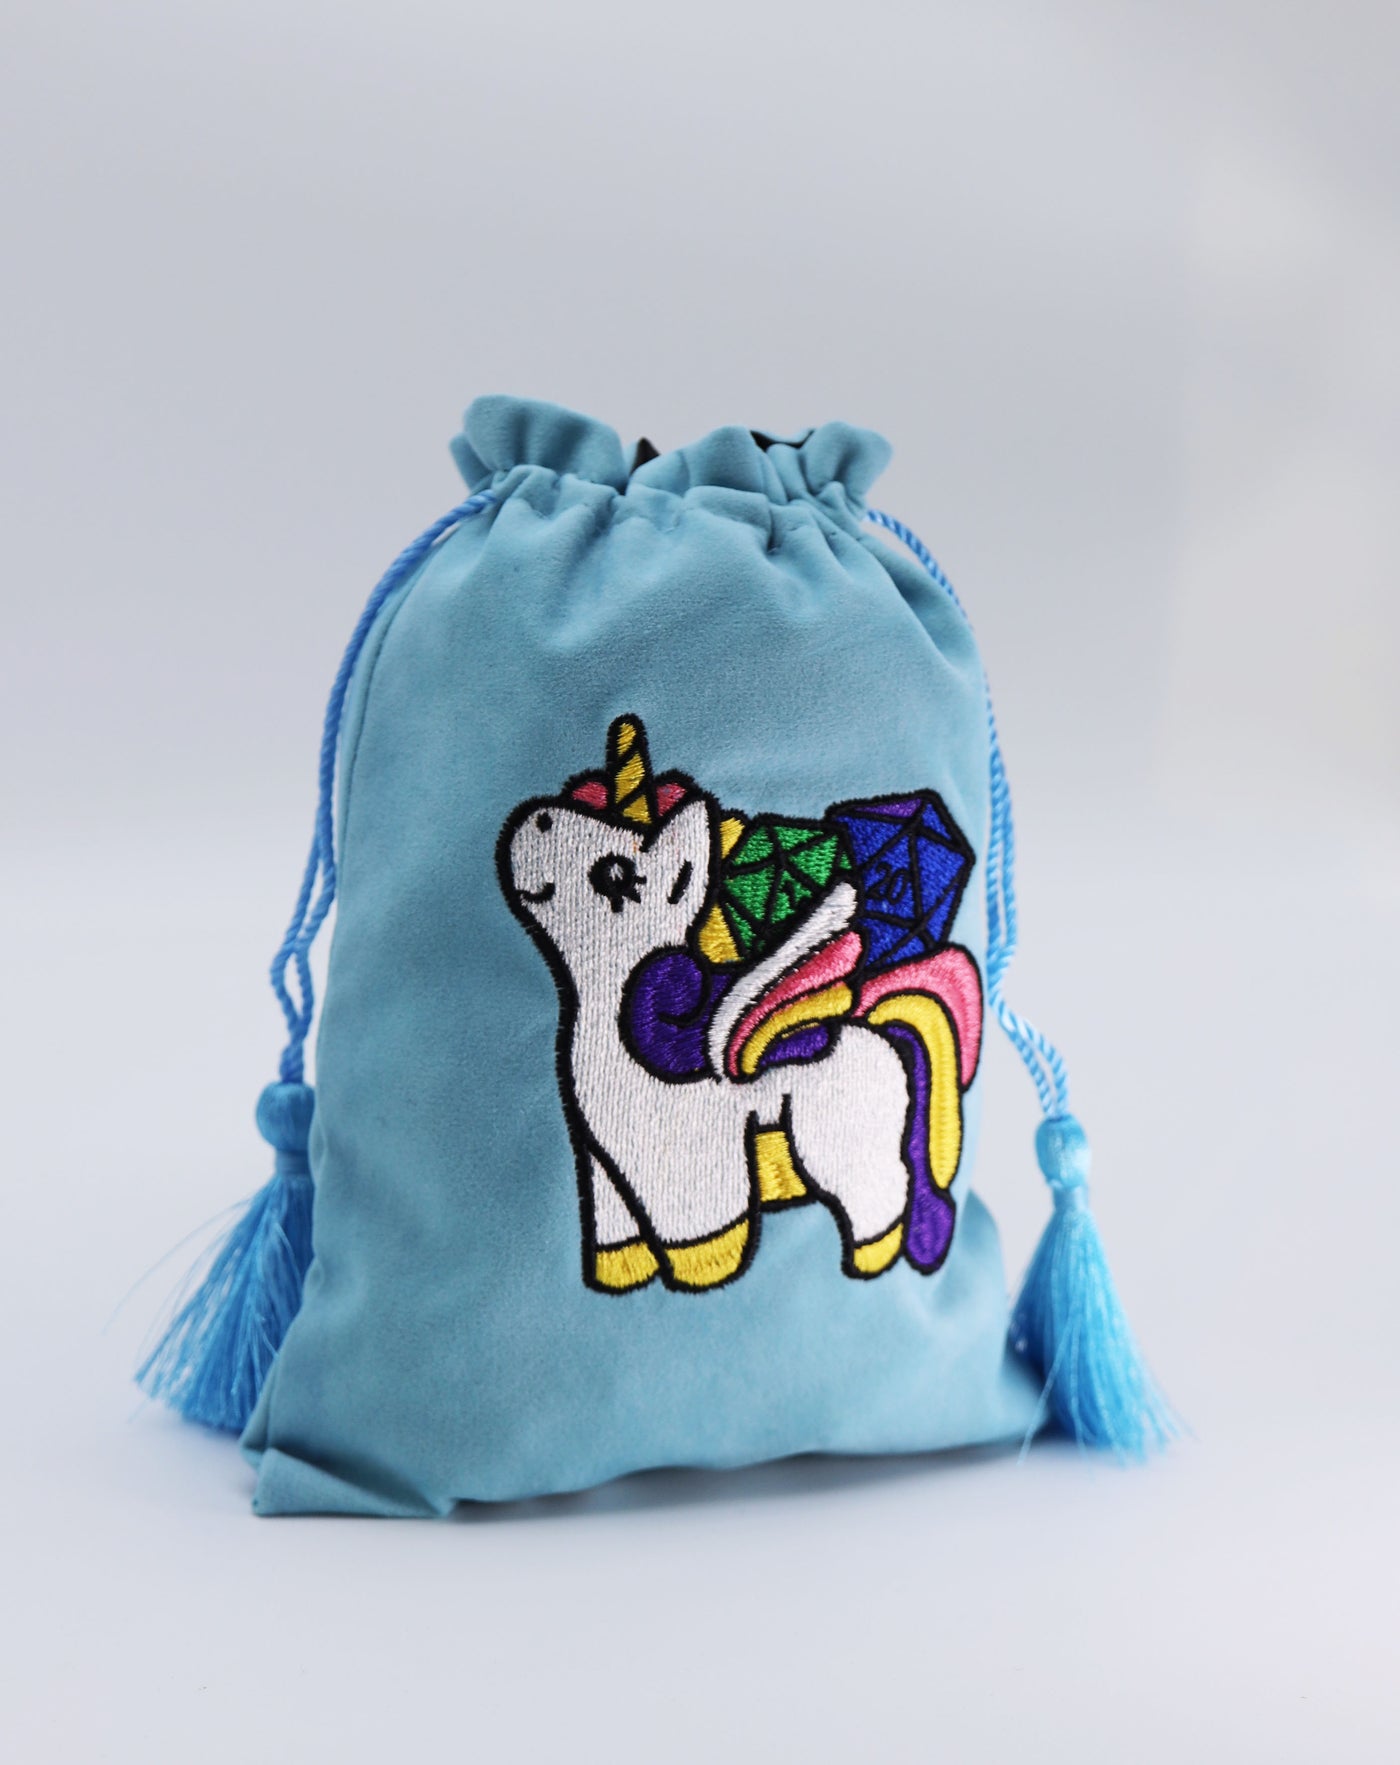 Dice Bag - Sparkles the Unicorn Dice Box Foam Brain Games